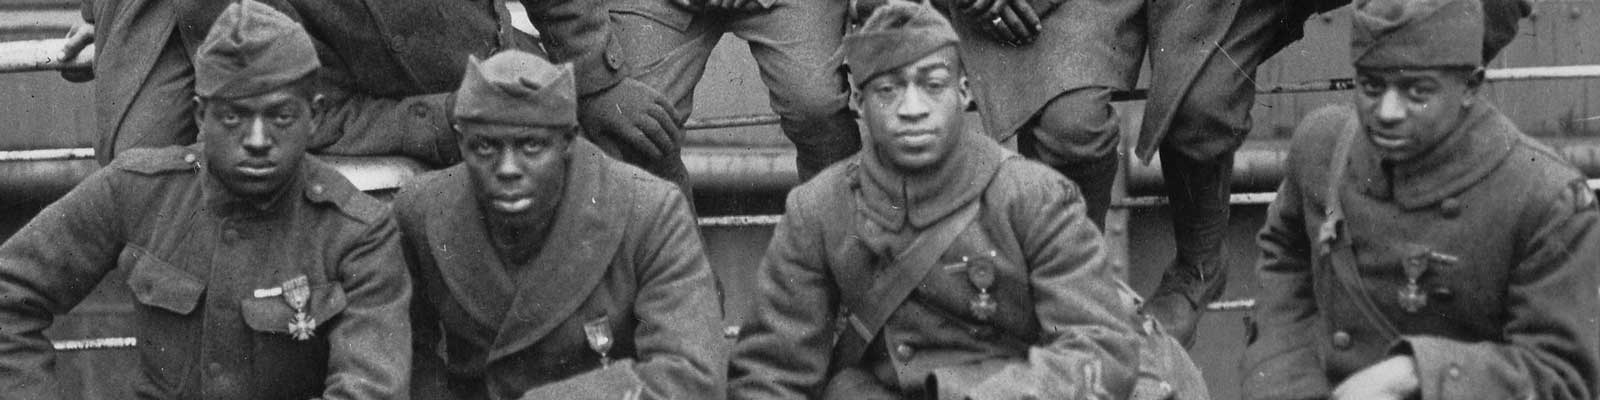 The Harlem Hellfighters of World War I